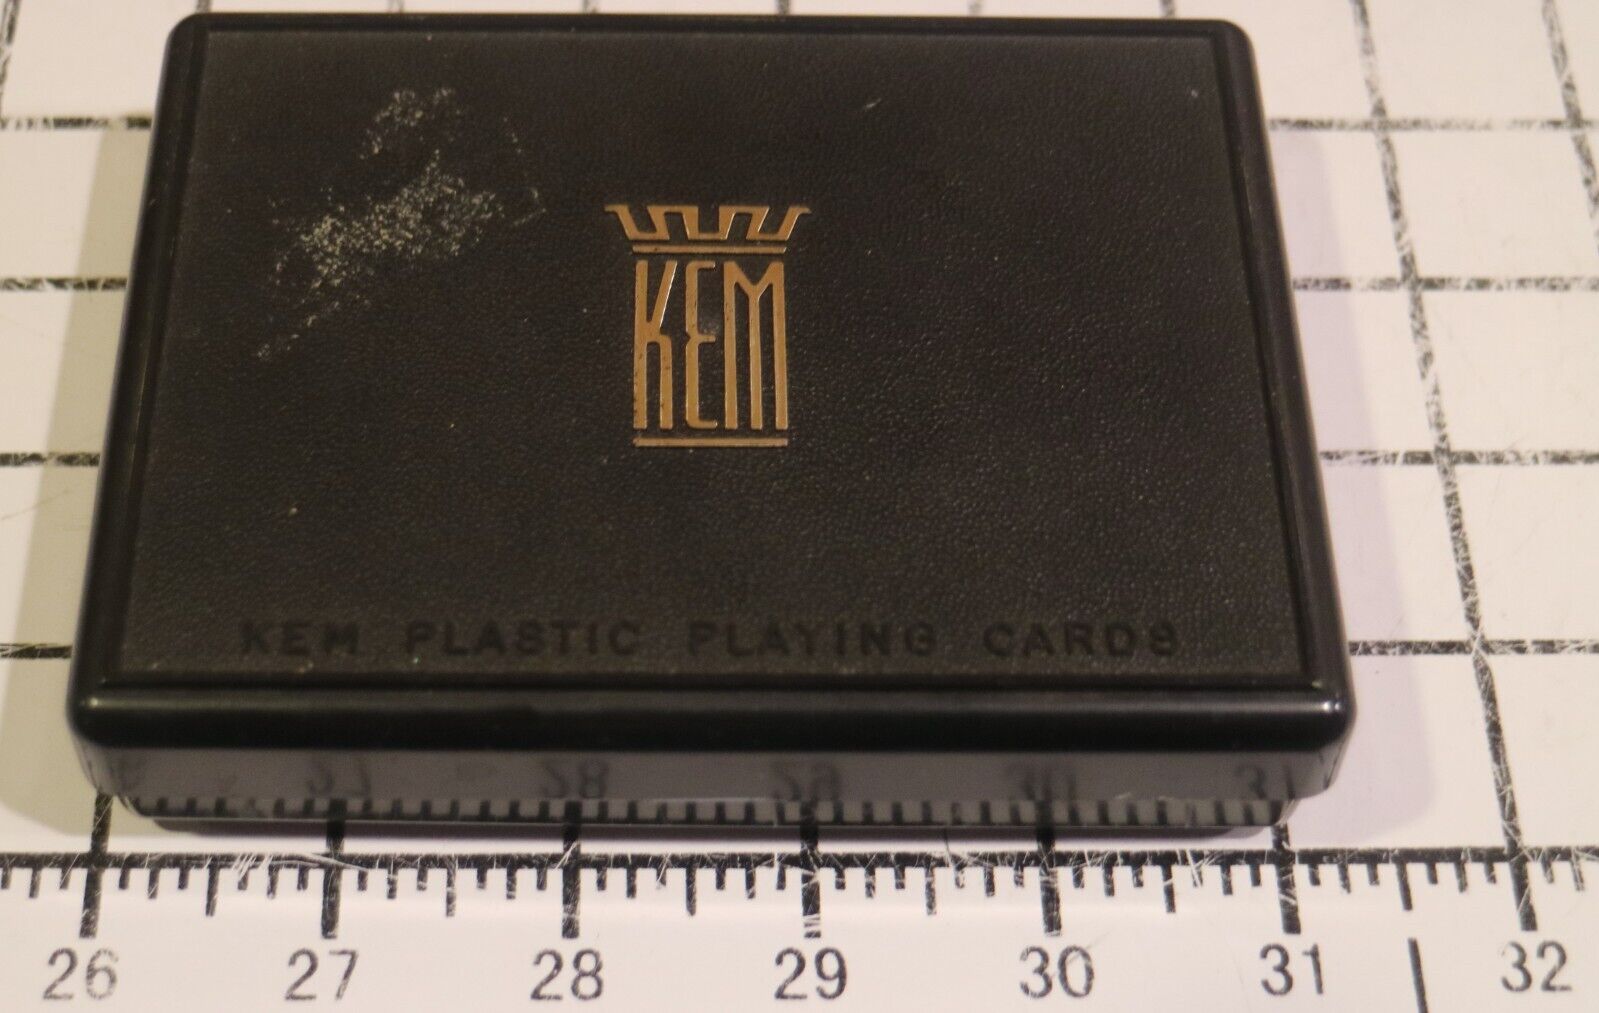 KEM Plastic Playing Cards 2 Complete Decks Vintage USA